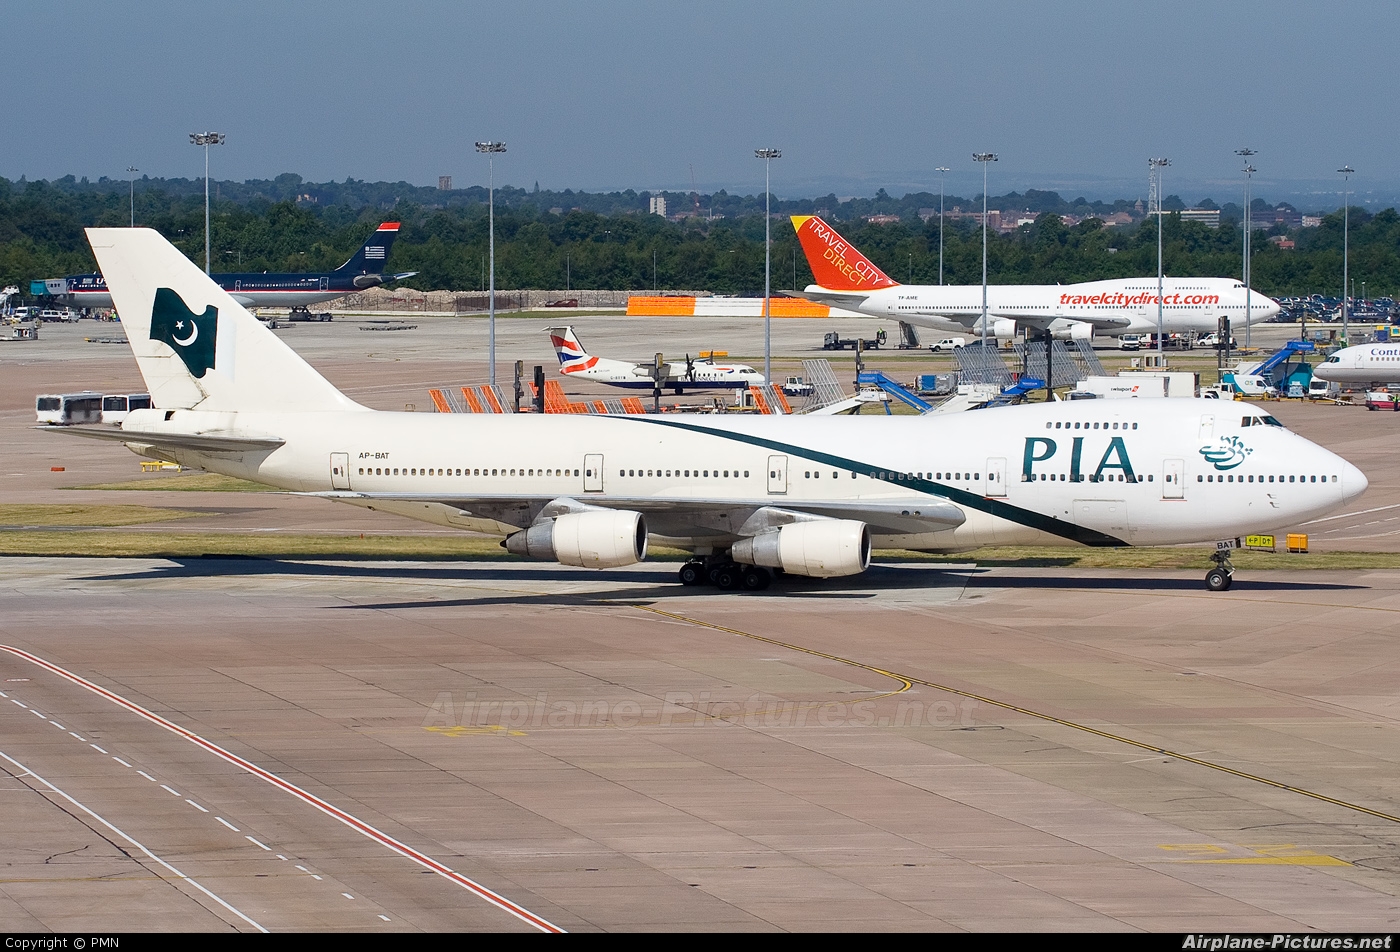 PIA - Pakistan International Airlines AP-BAT aircraft at Manchester